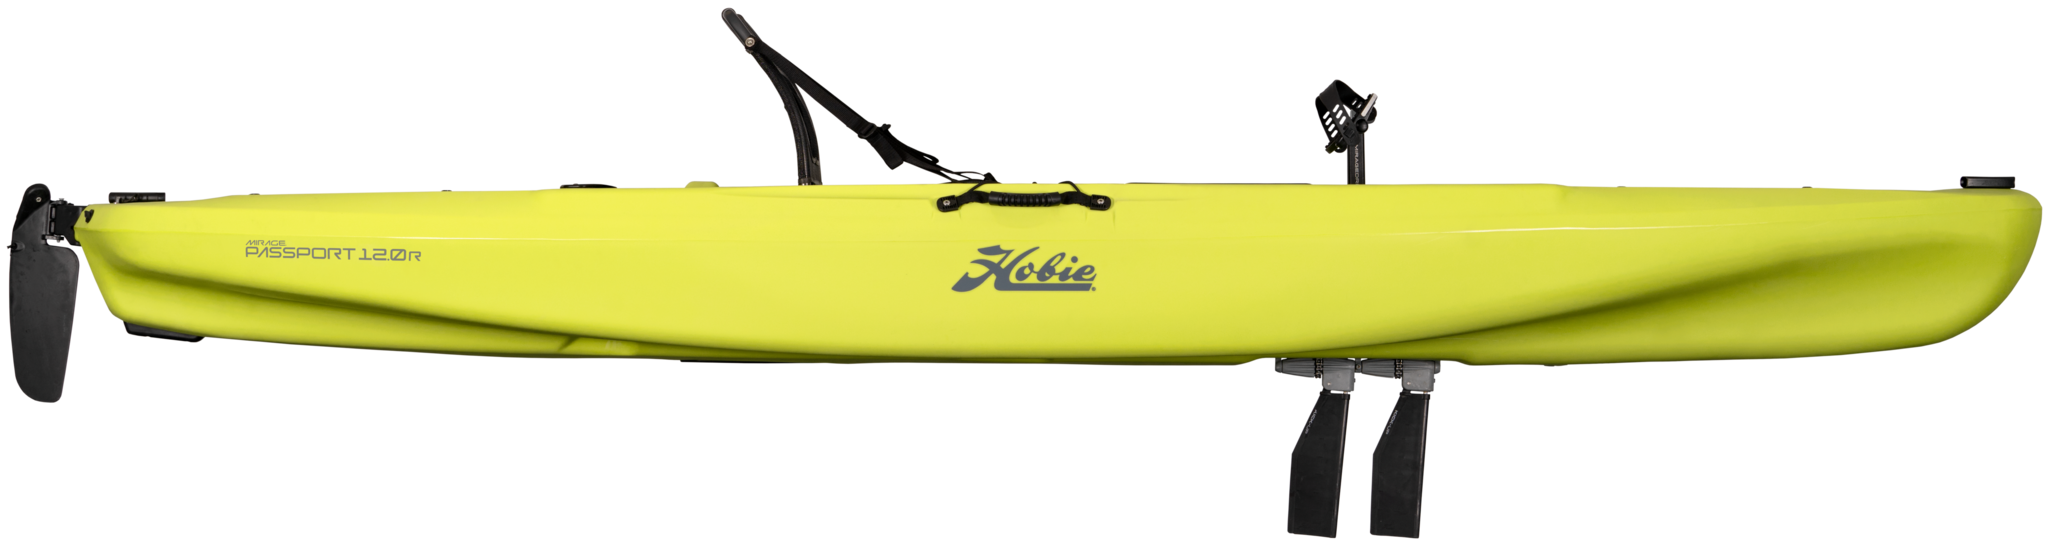 Hobie Hobie Passport Roto Kayak 2022 Seagrass 12.0